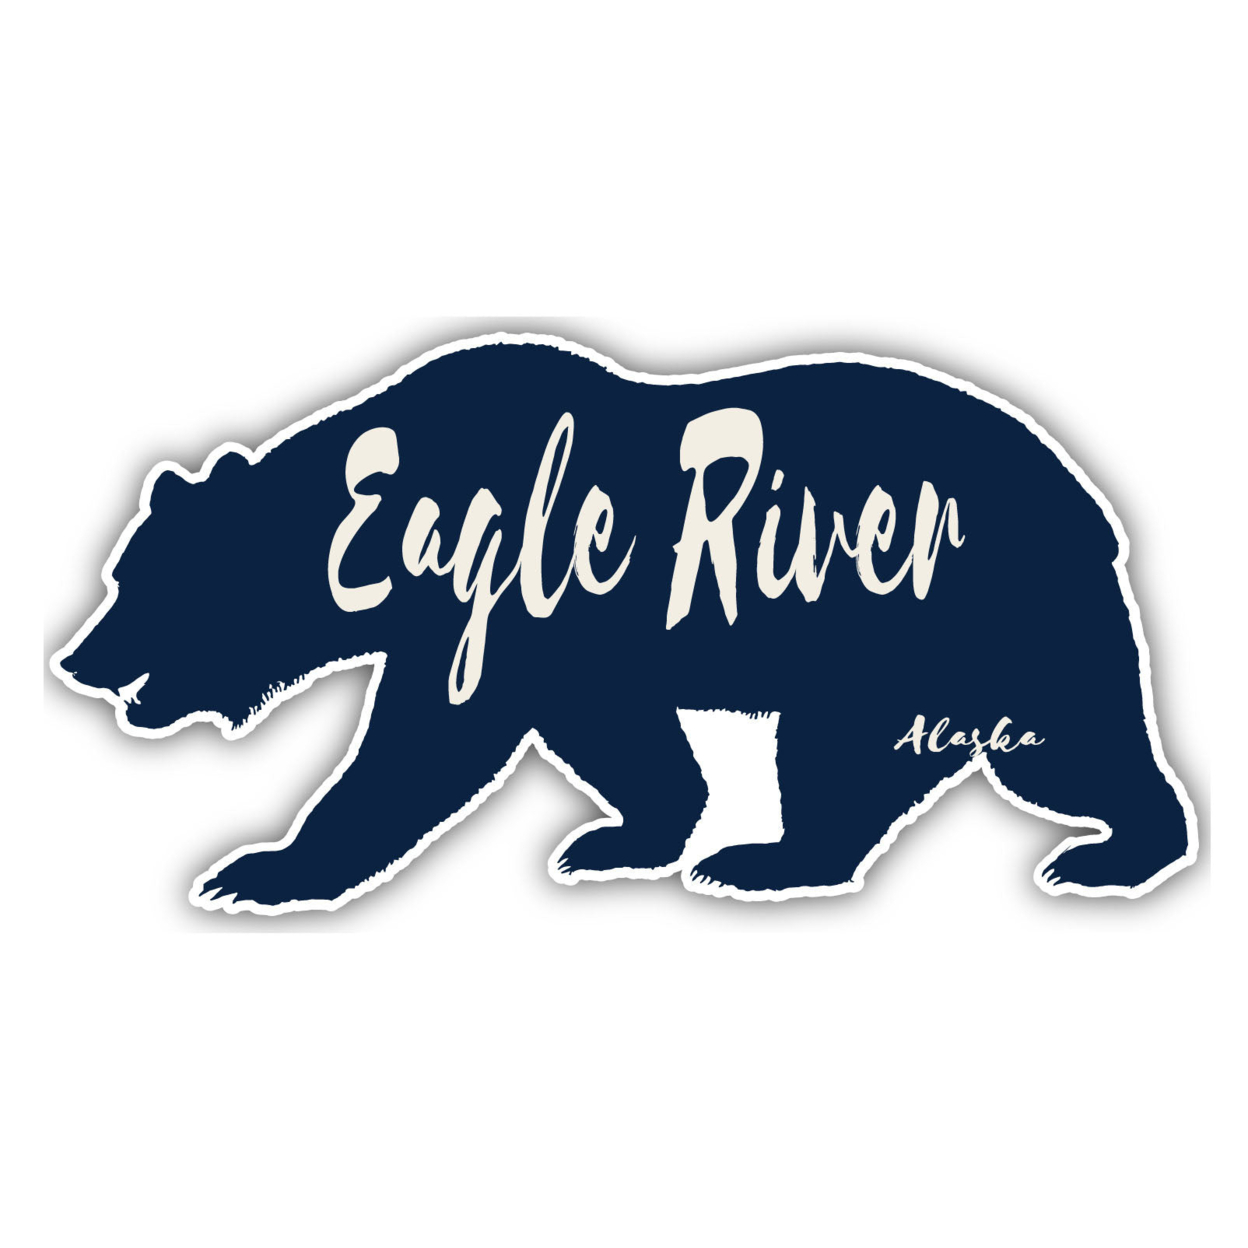 Eagle River Alaska Souvenir Decorative Stickers (Choose Theme And Size) - Single Unit, 2-Inch, Adventures Awaits